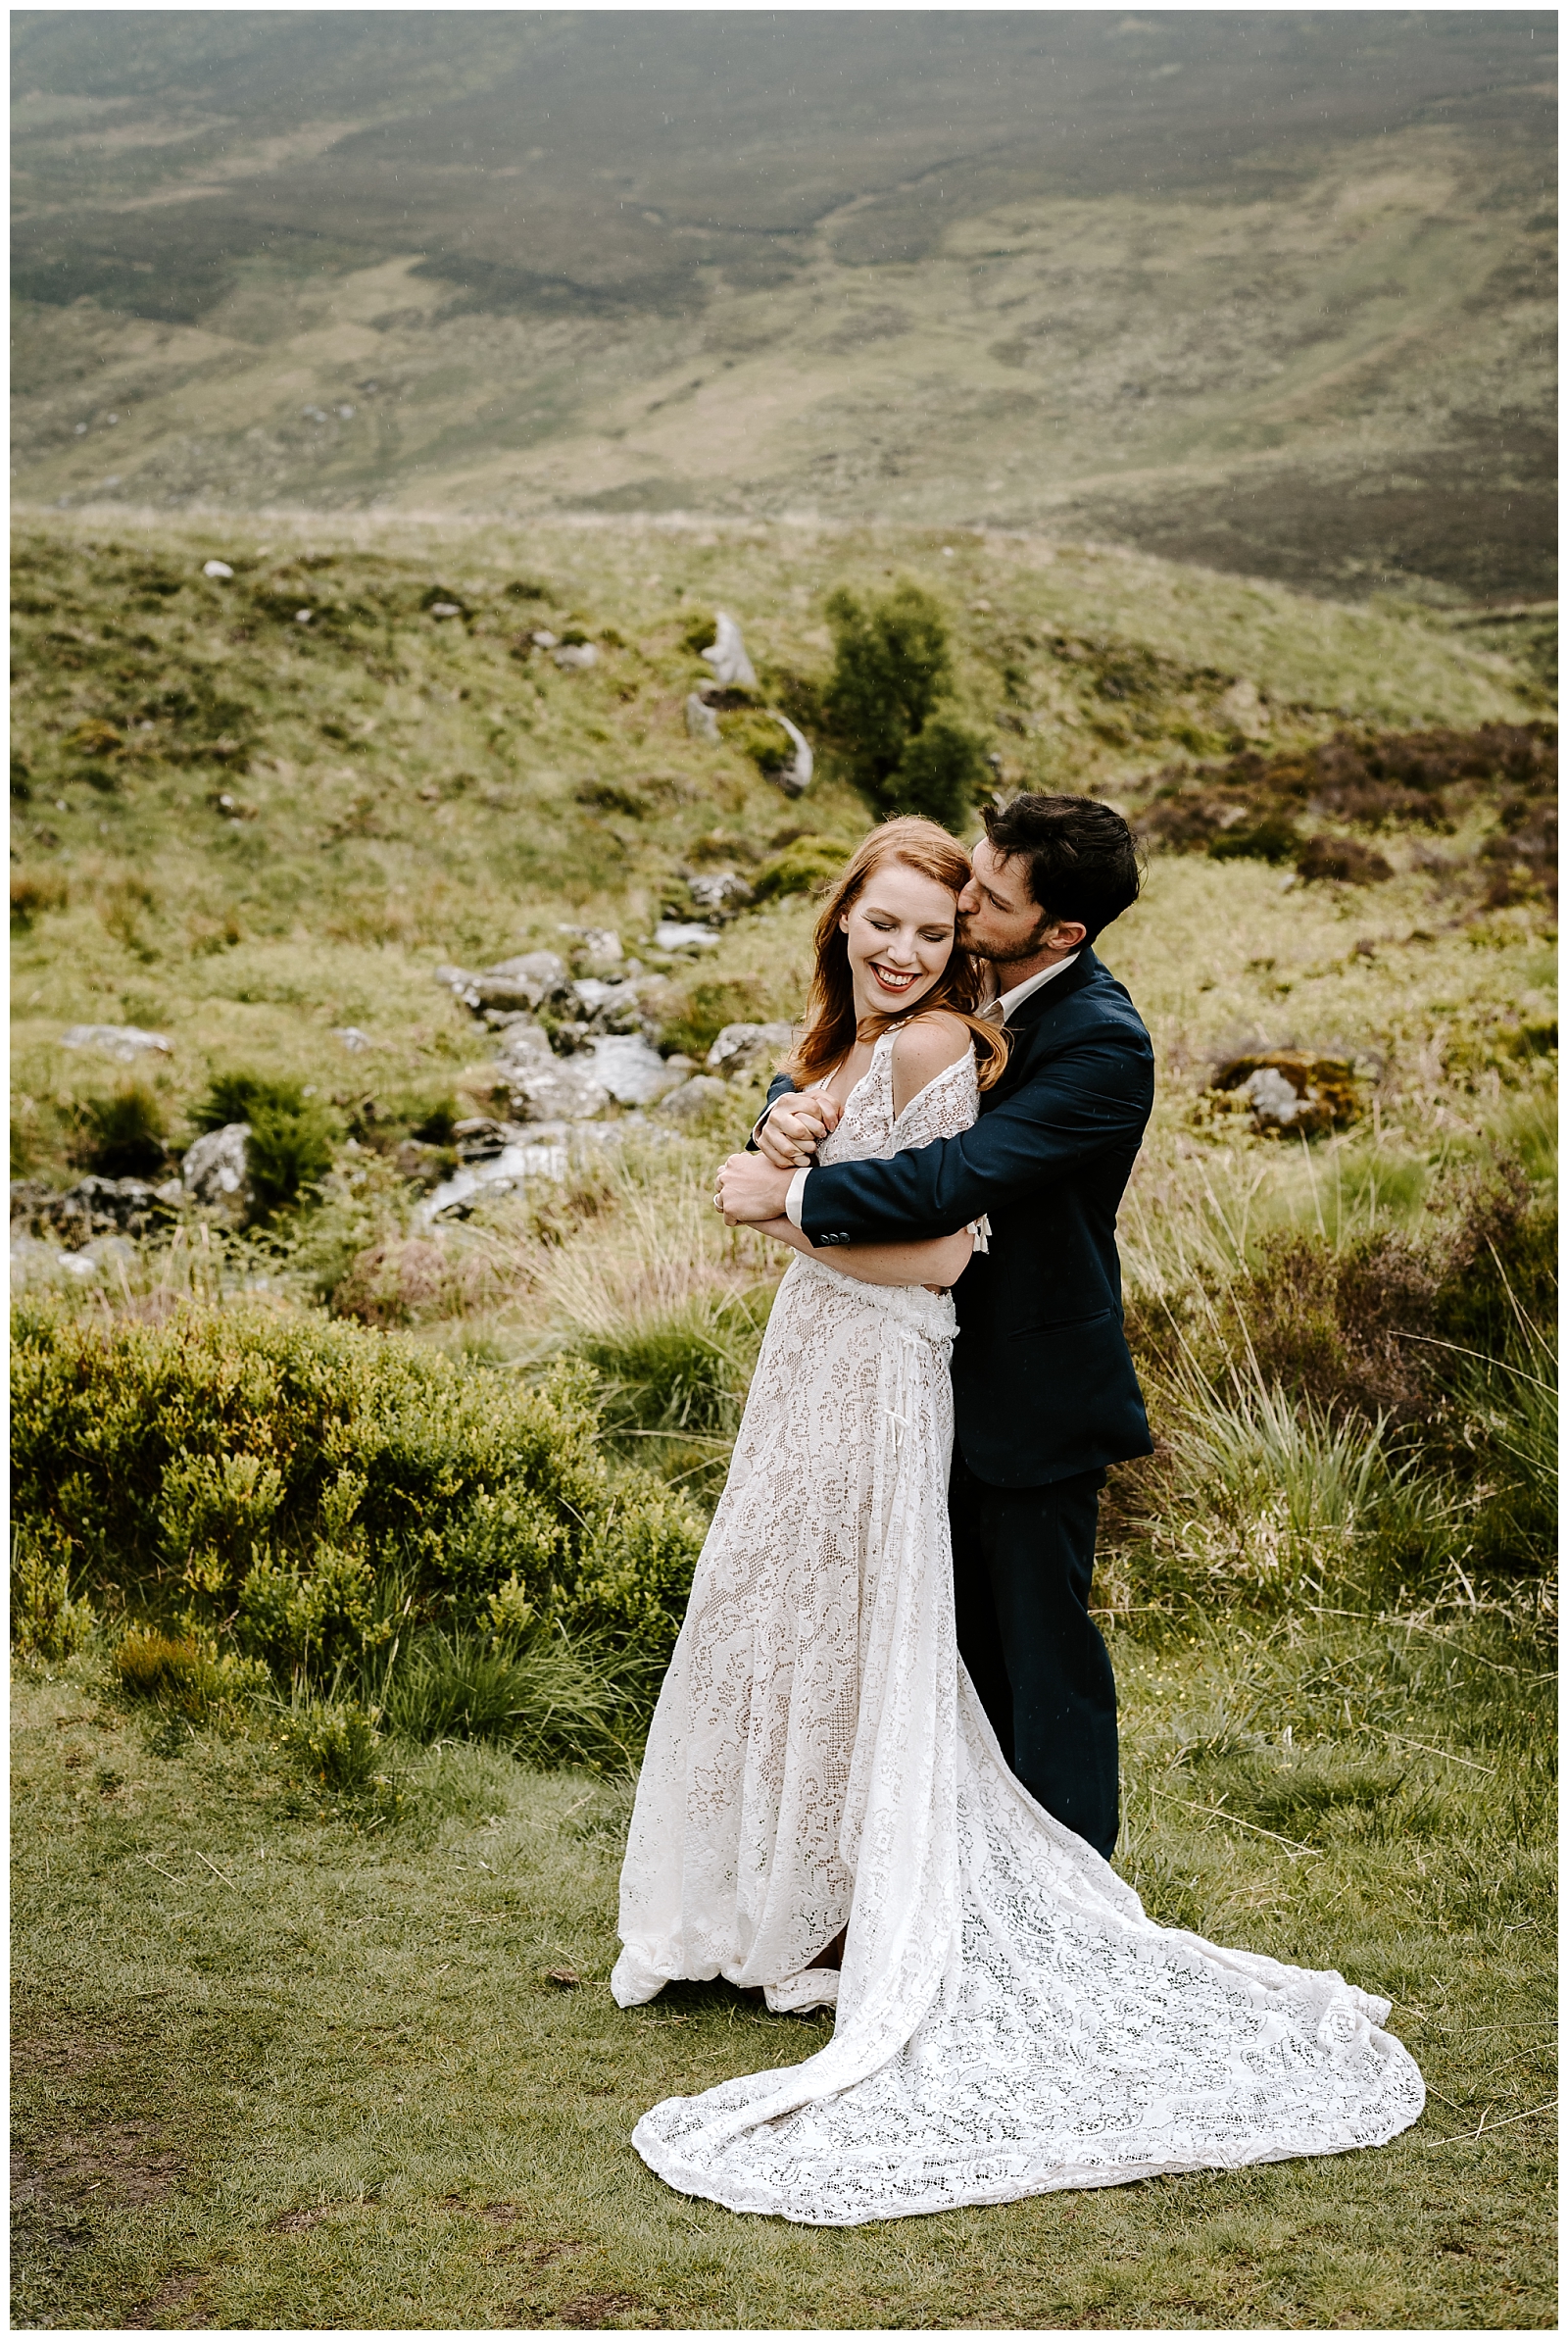 Beautiful couple elopes in Ireland